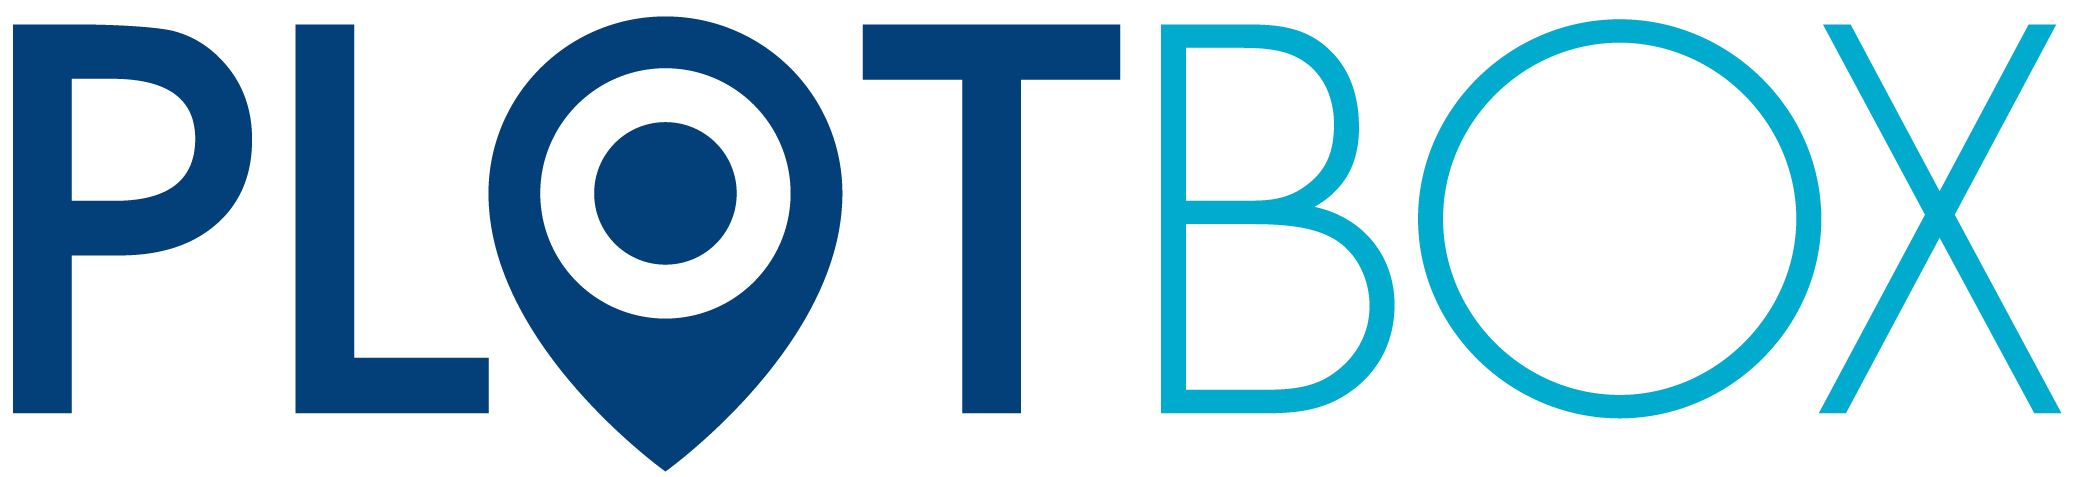 Plotbox logo